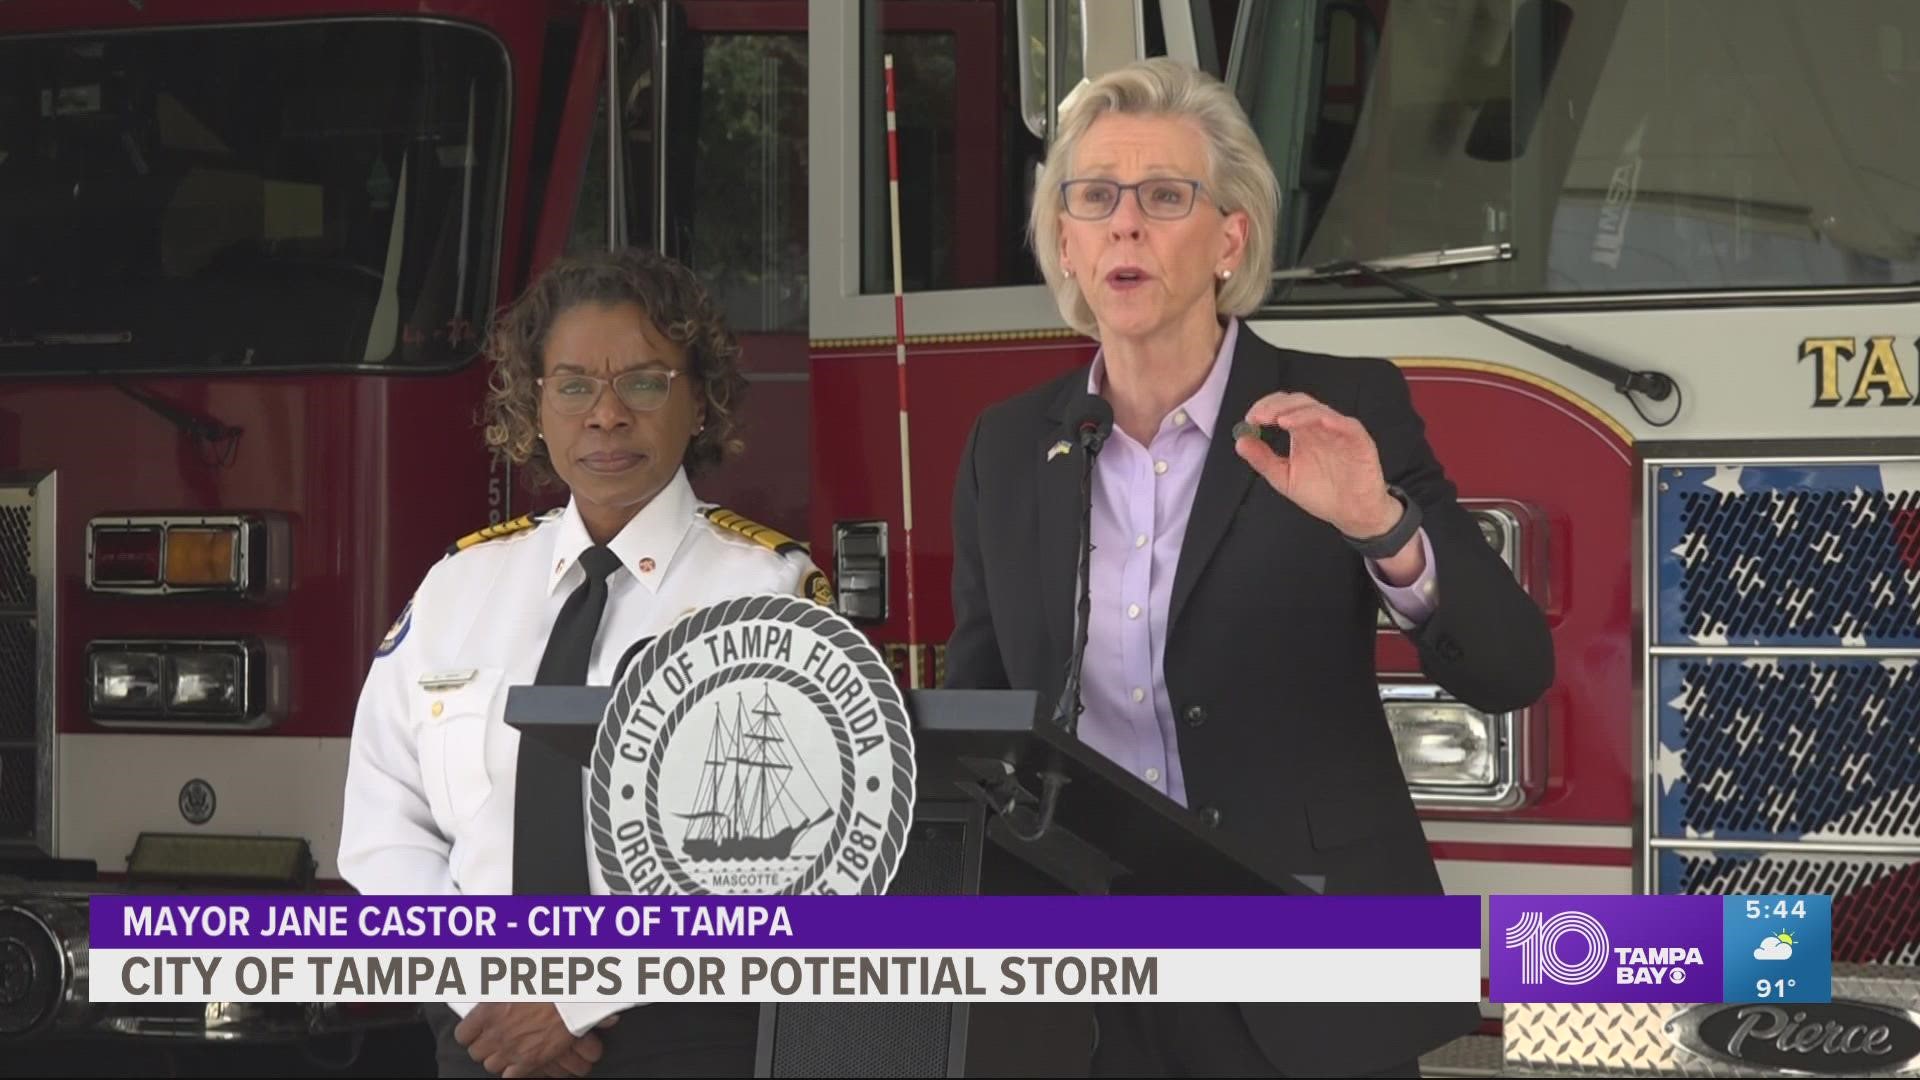 Tampa Mayor Jane Castor said the city has new ways to respond to a storm this hurricane season.